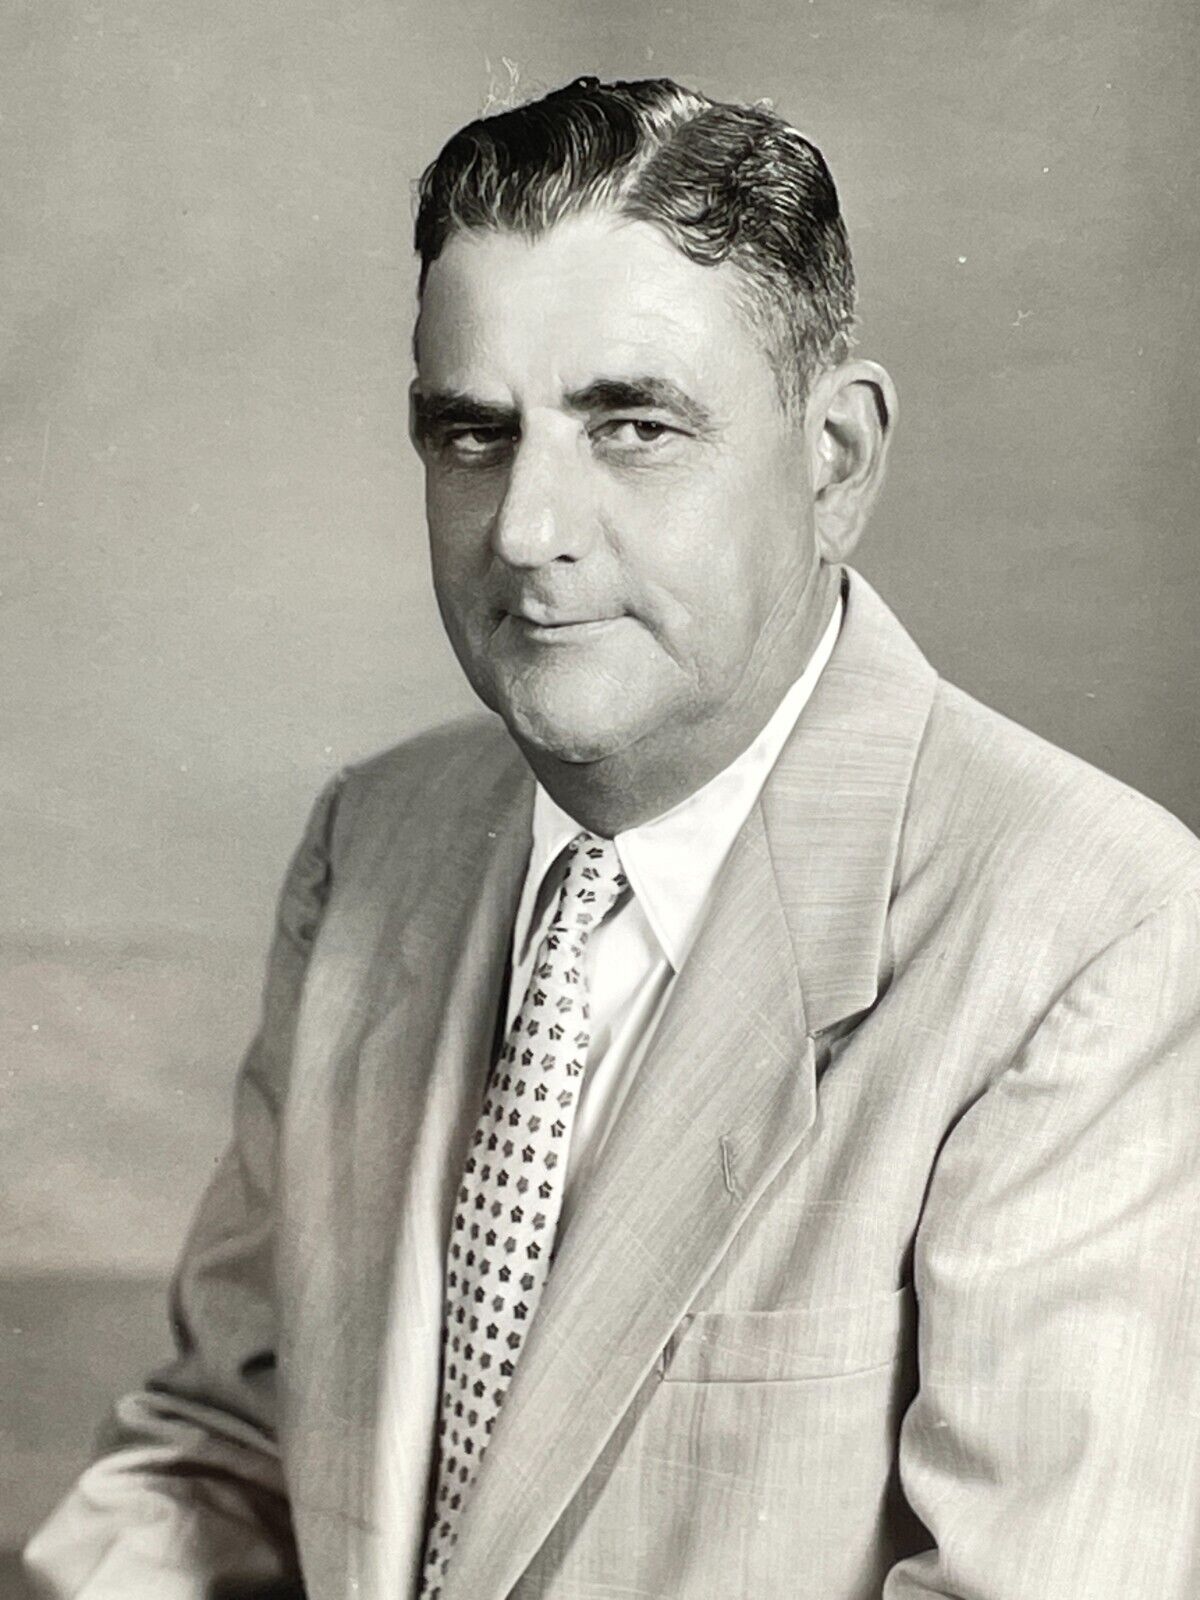 1C Photograph Old Man Suit Portrait Headshot 1950\'s Handsome Older Gentleman